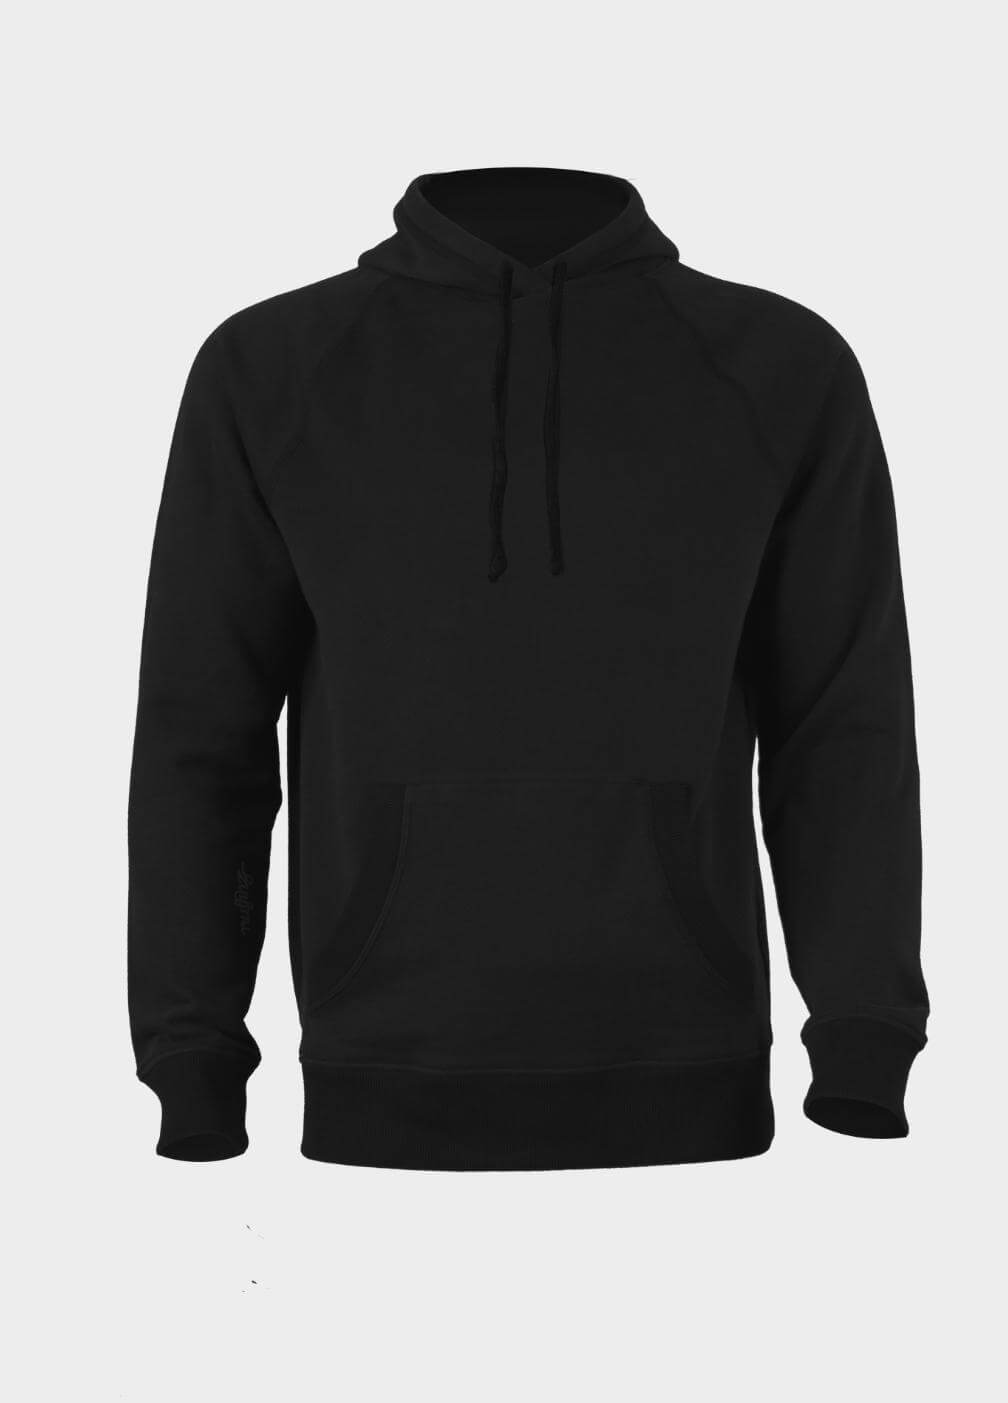 nuffinz menswear- hoodies - black sea hoodie - 100% organic cotton - carbonized - black